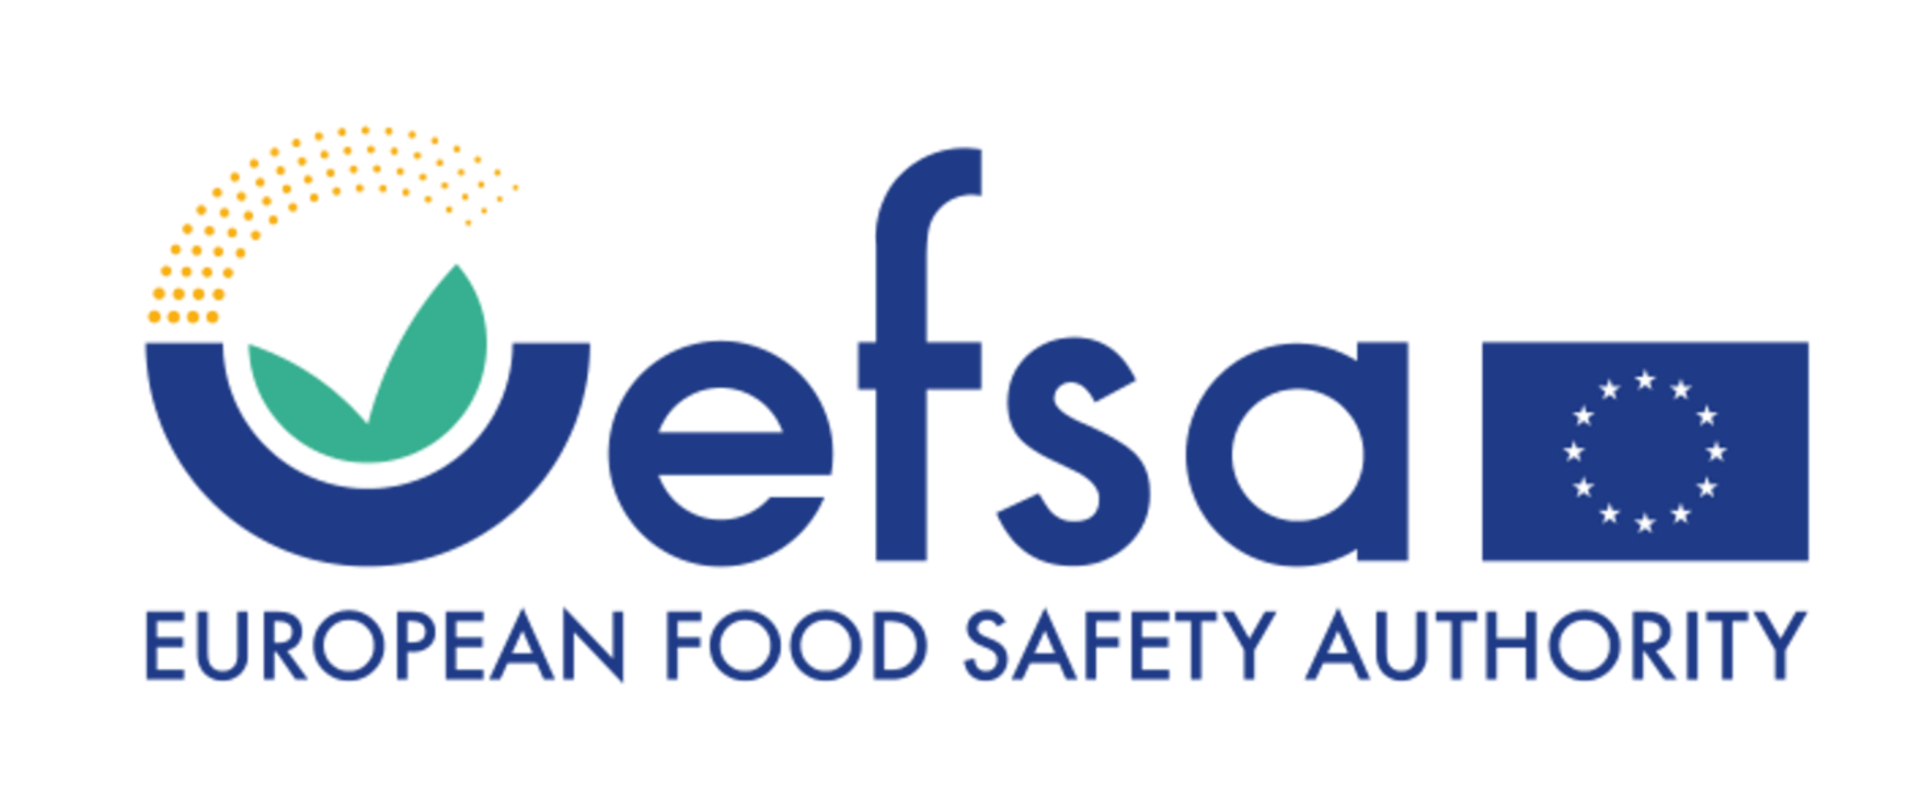 European food safety